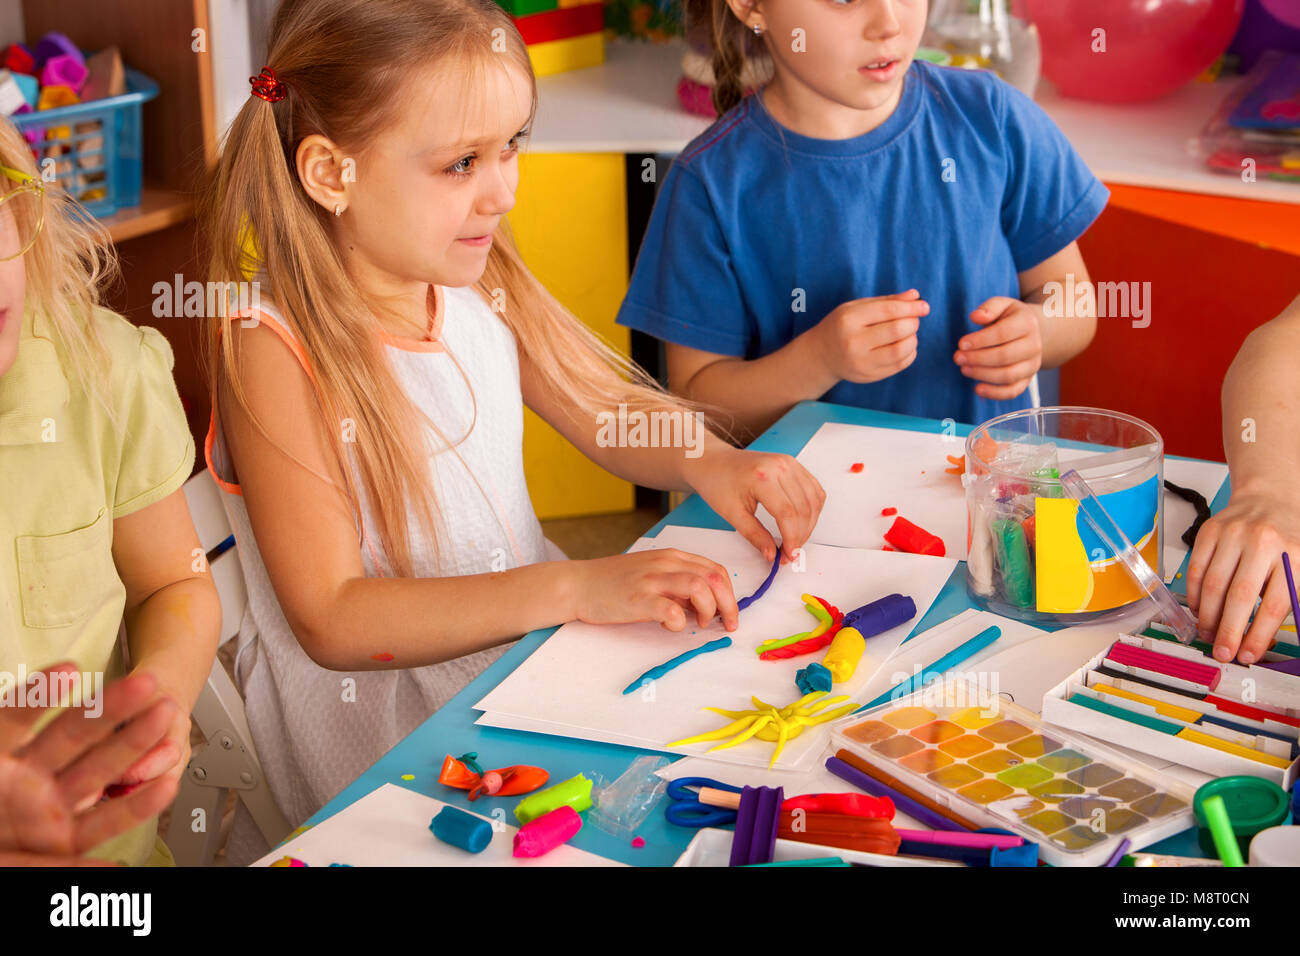 Plasticine Modeling Clay In Children Class Teacher Teaches In School Stock  Photo - Download Image Now - iStock